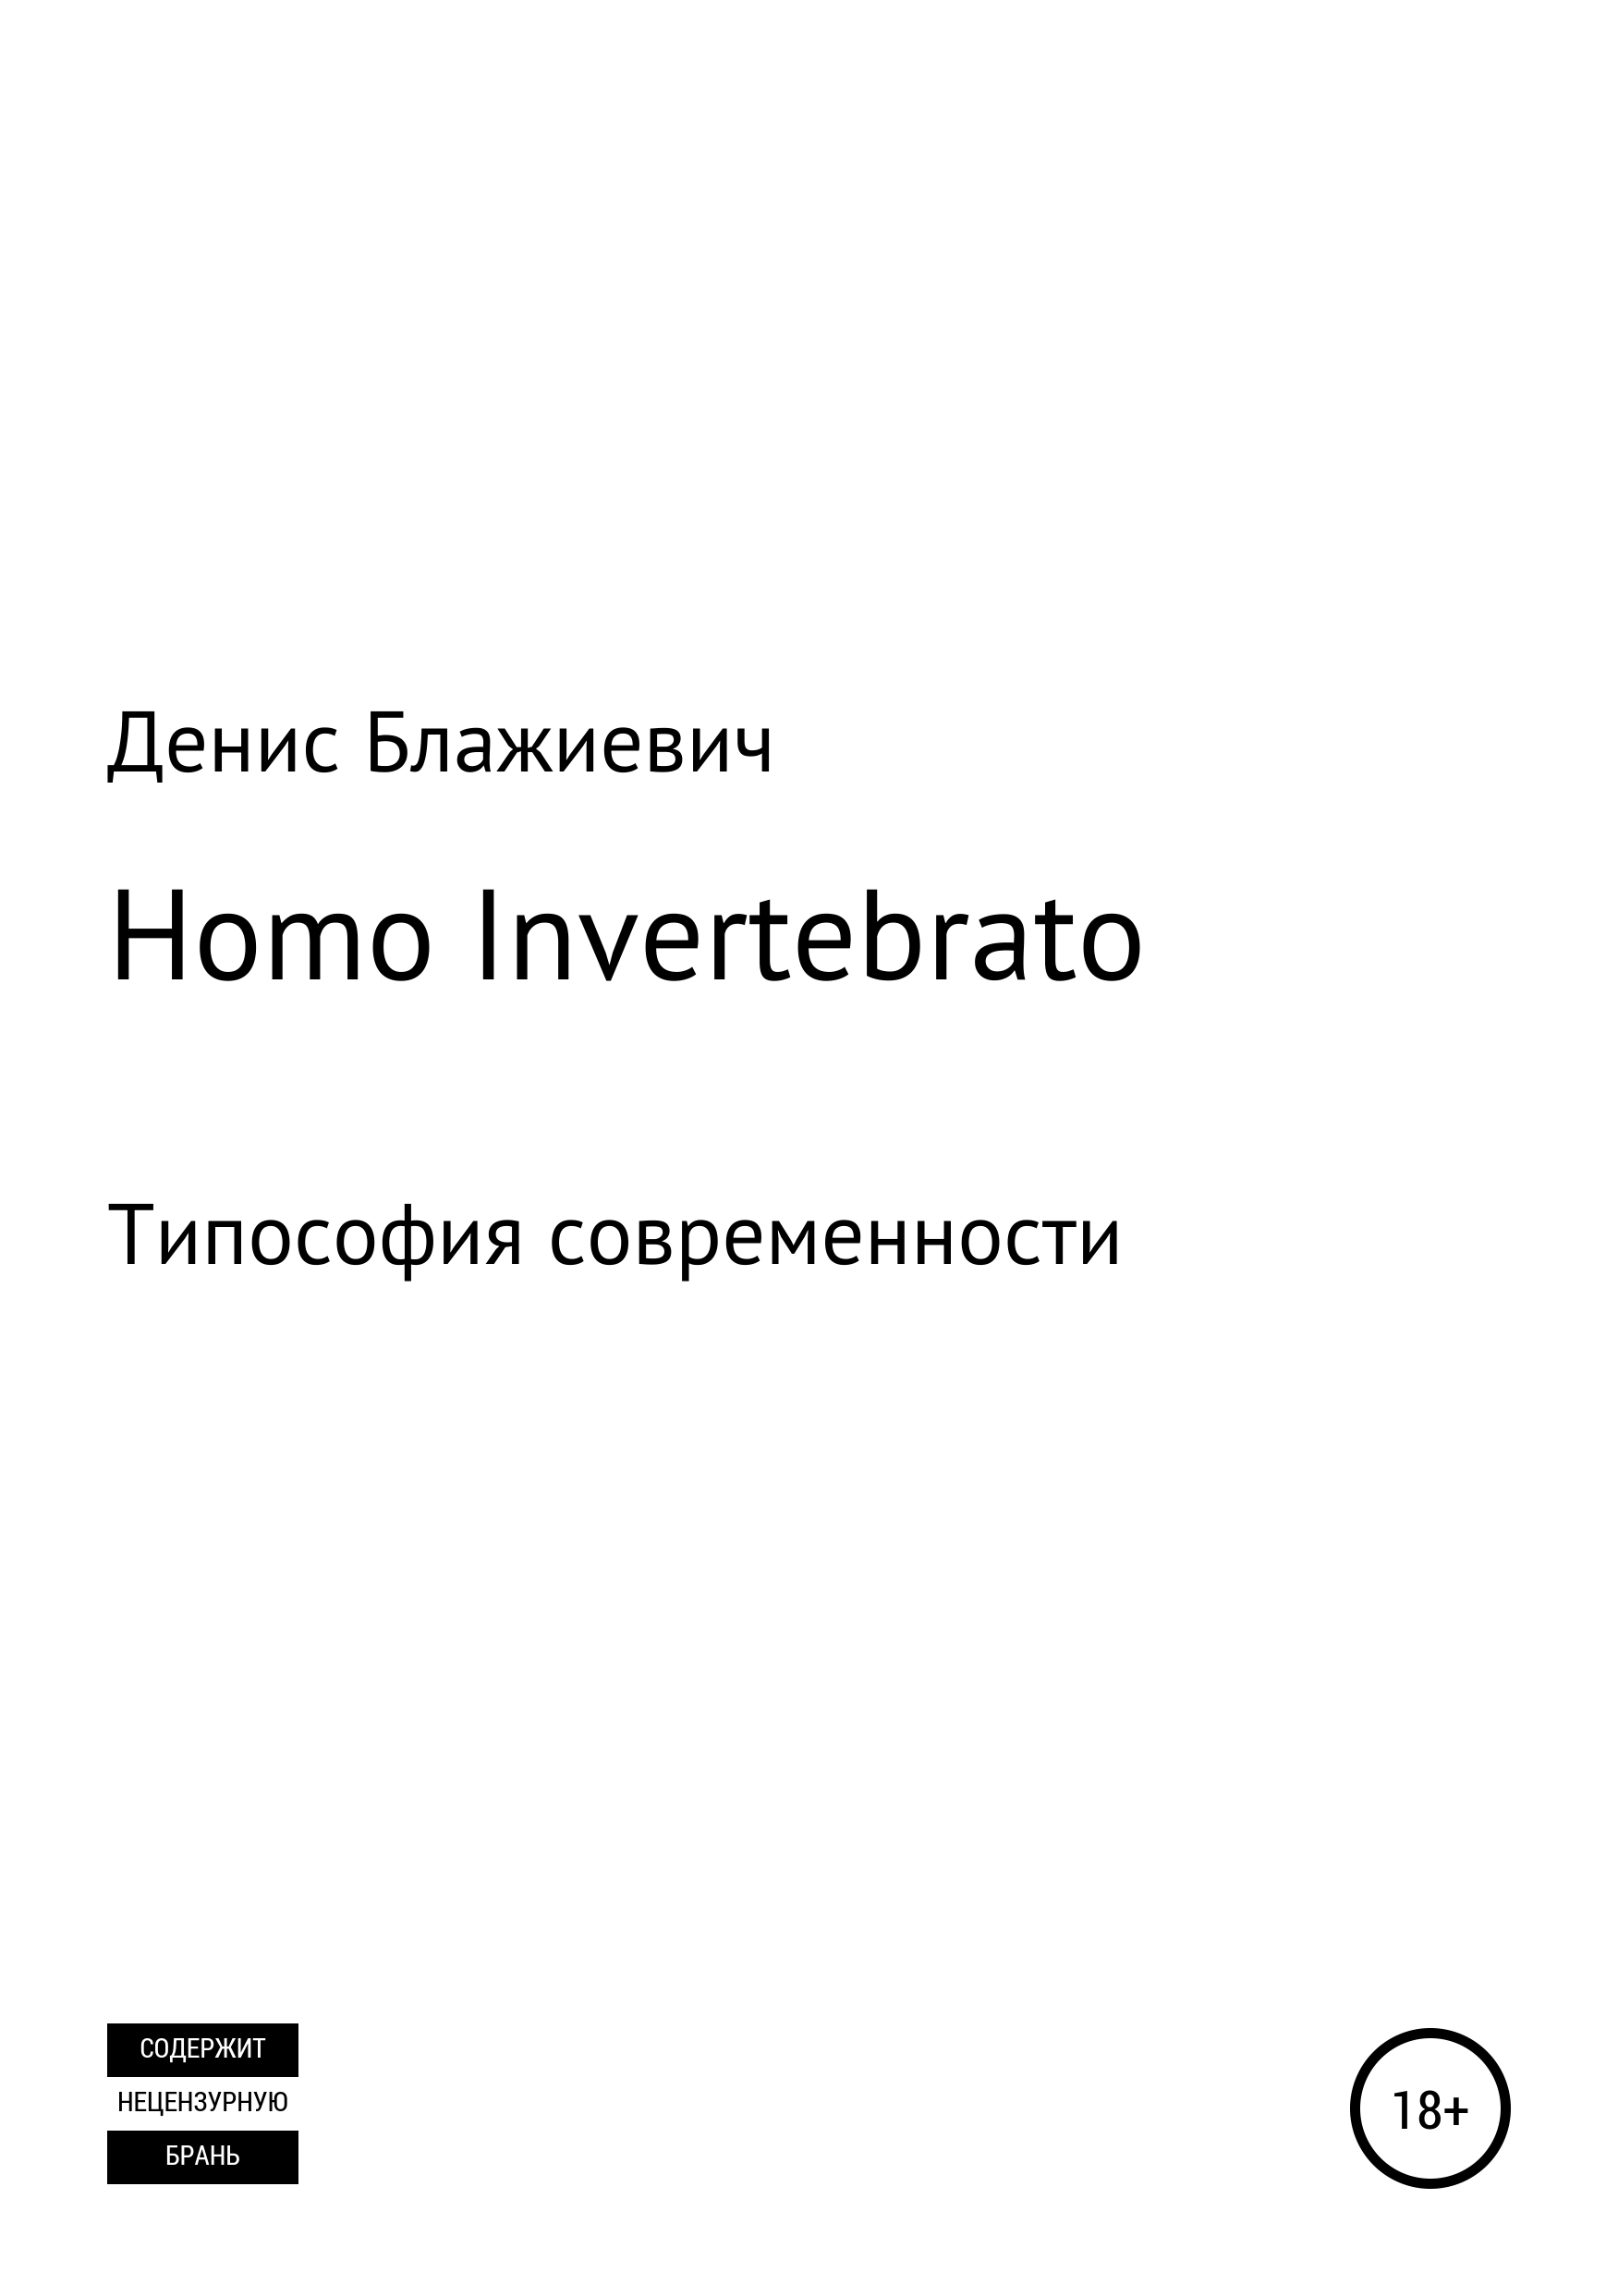 Homo Invertebrato.Типософия современности